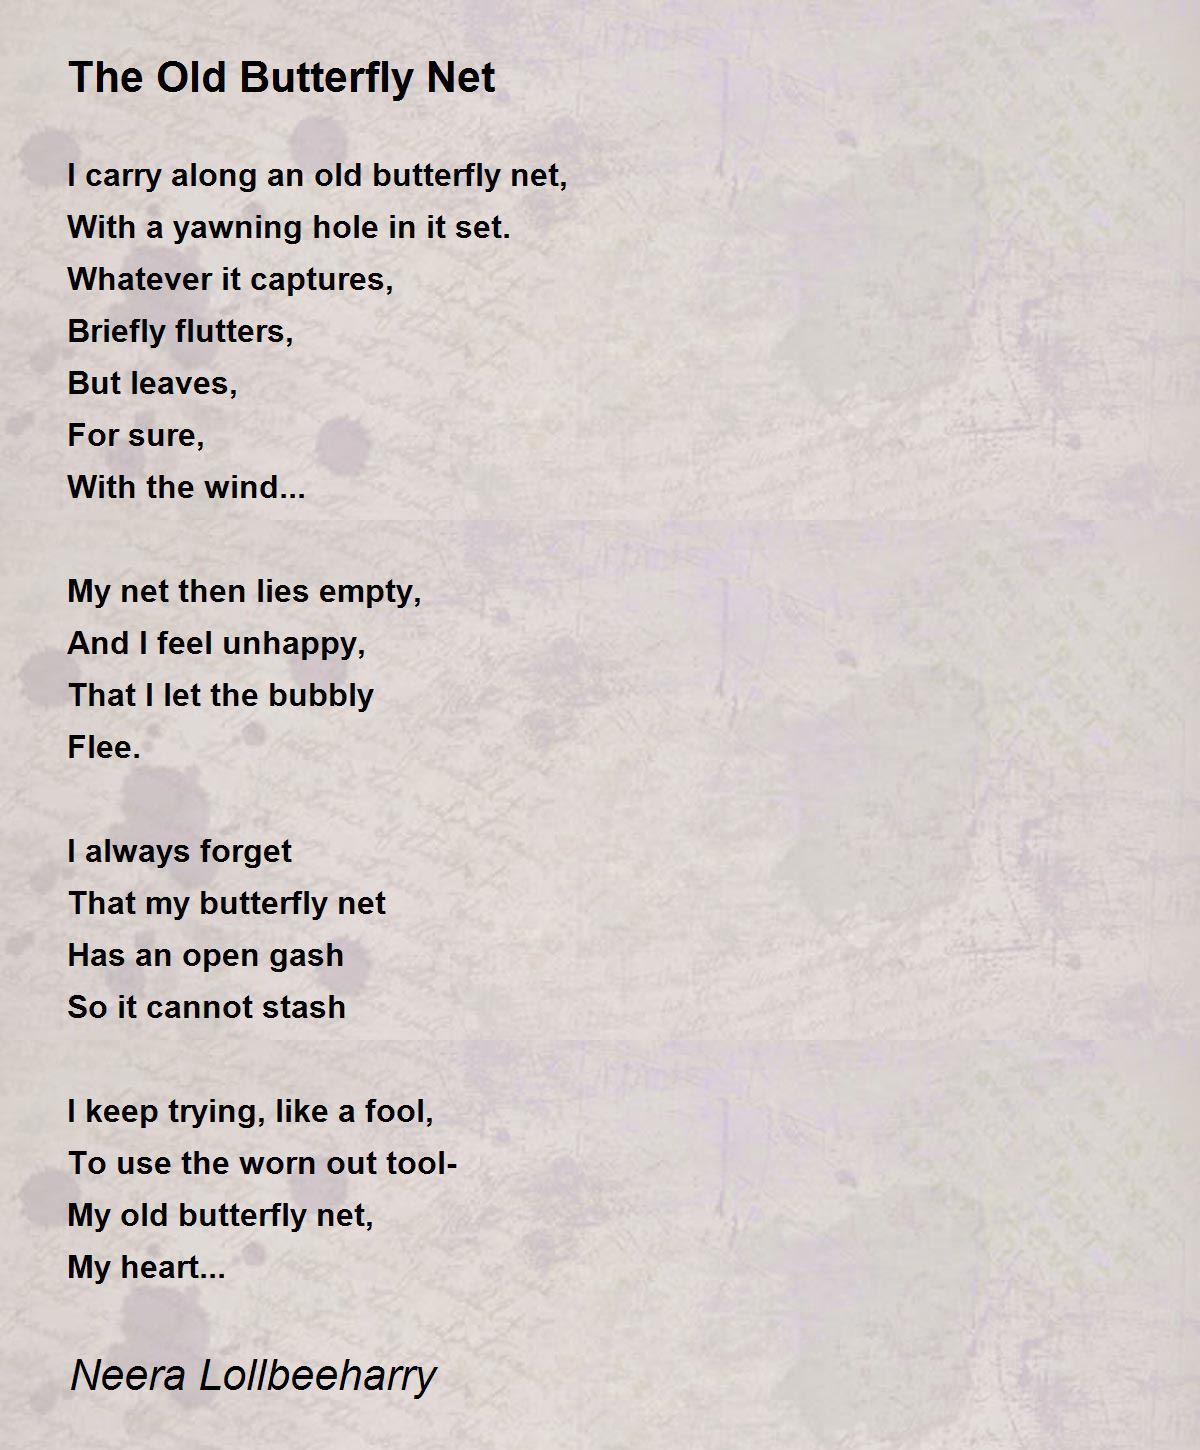 The Old Butterfly Net - The Old Butterfly Net Poem by Neera